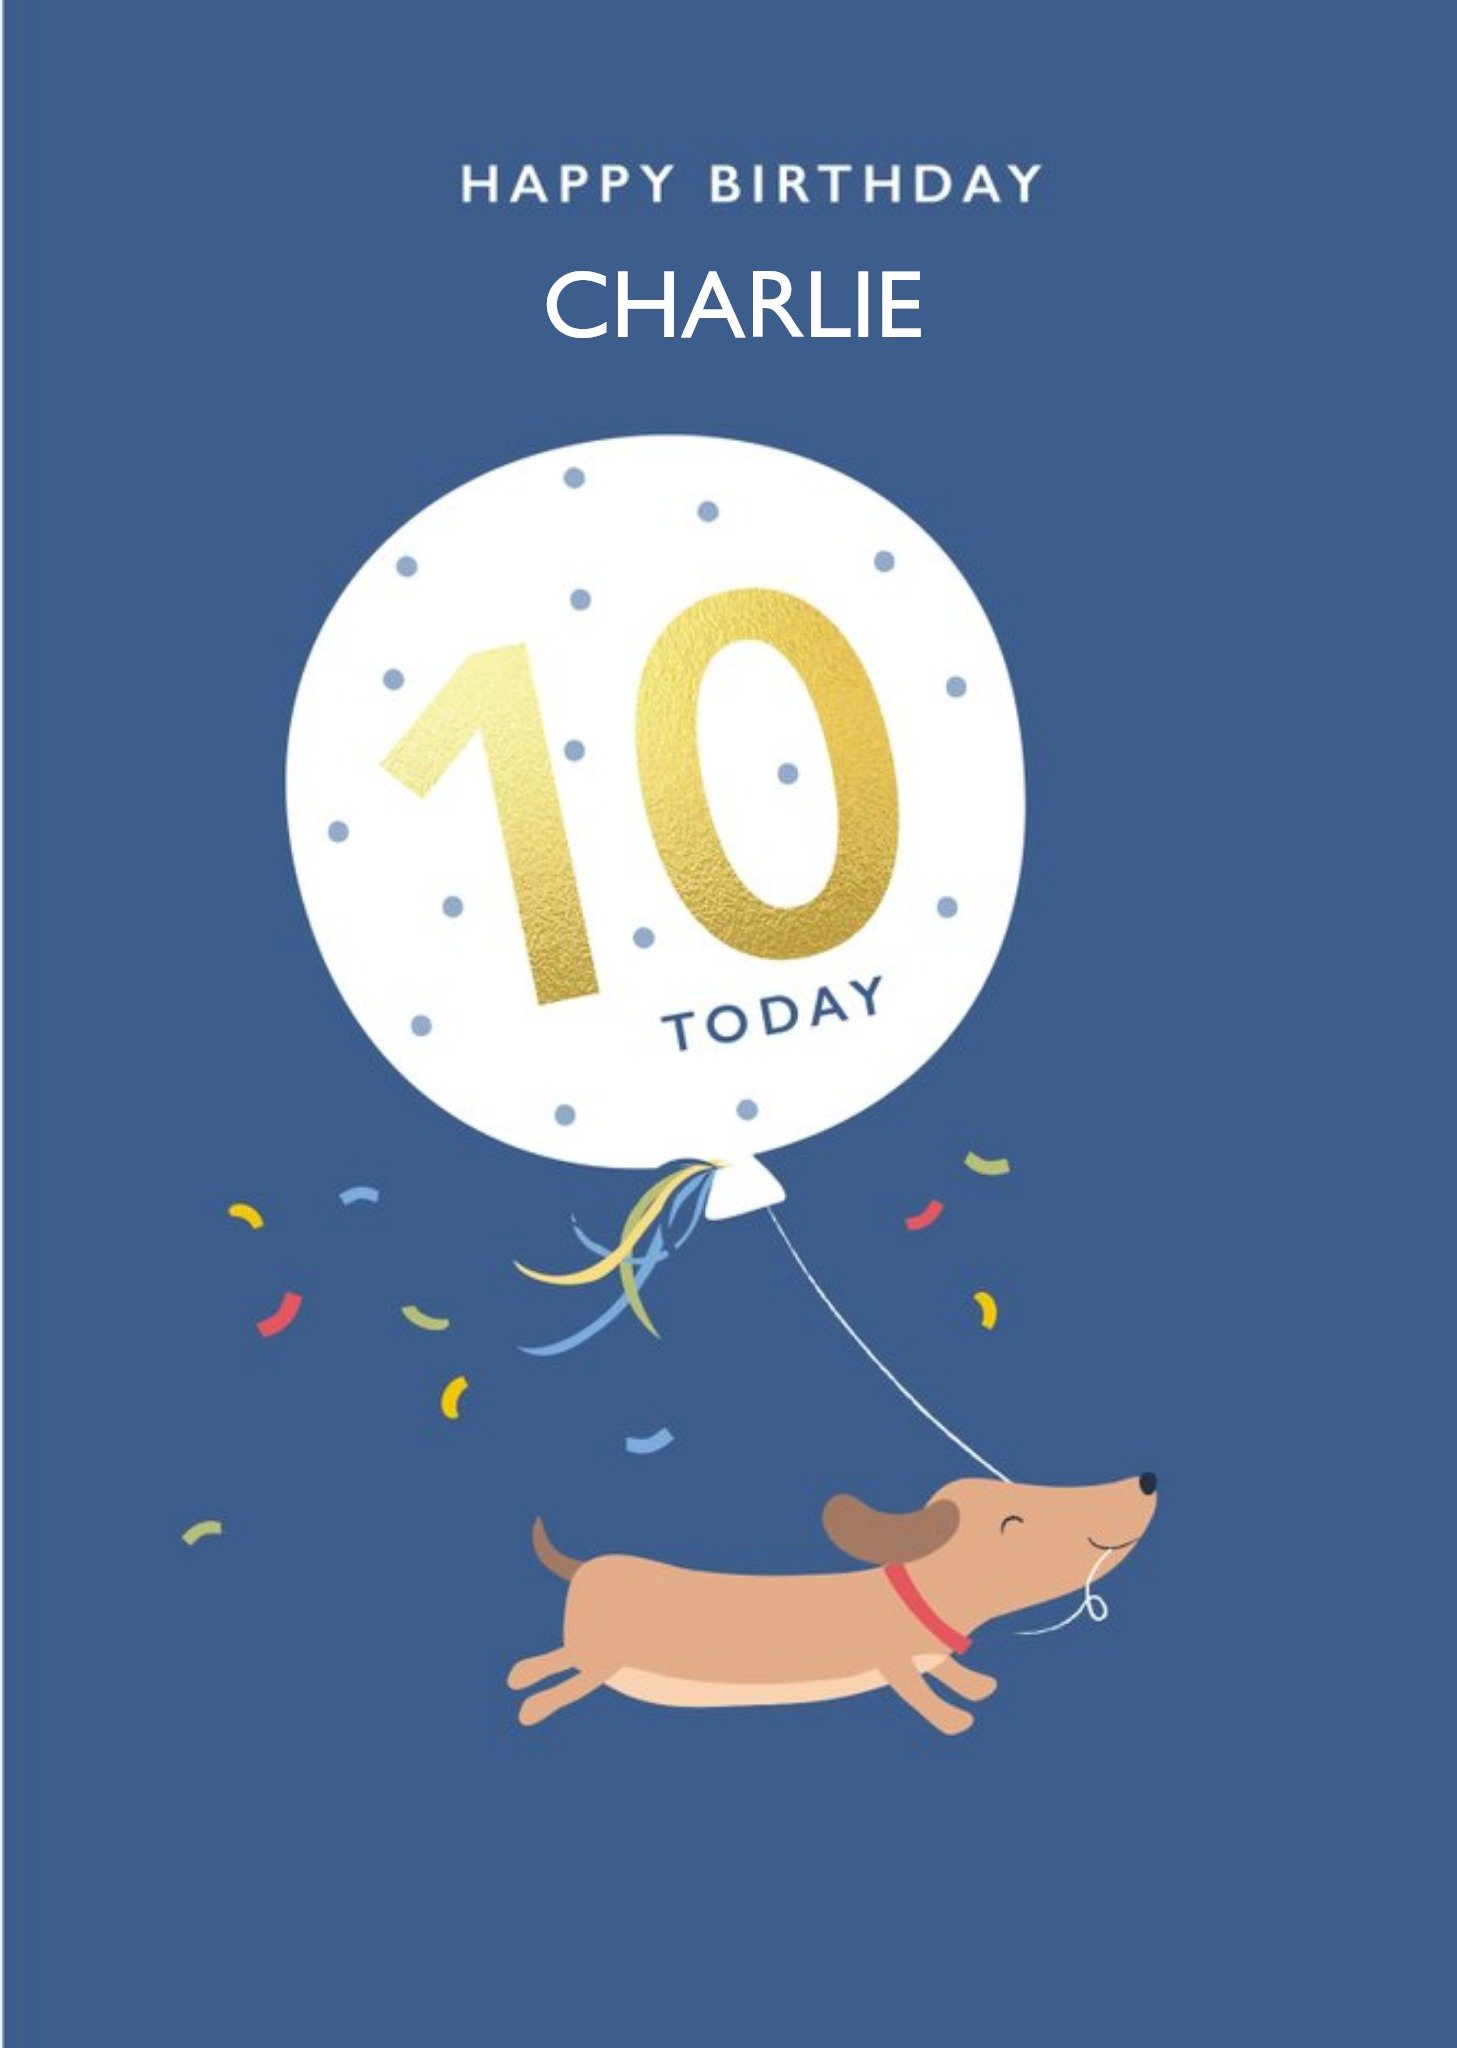 Moonpig Cute Illustration Sausage Dog Balloon 10 Today Male Birthday Card Ecard